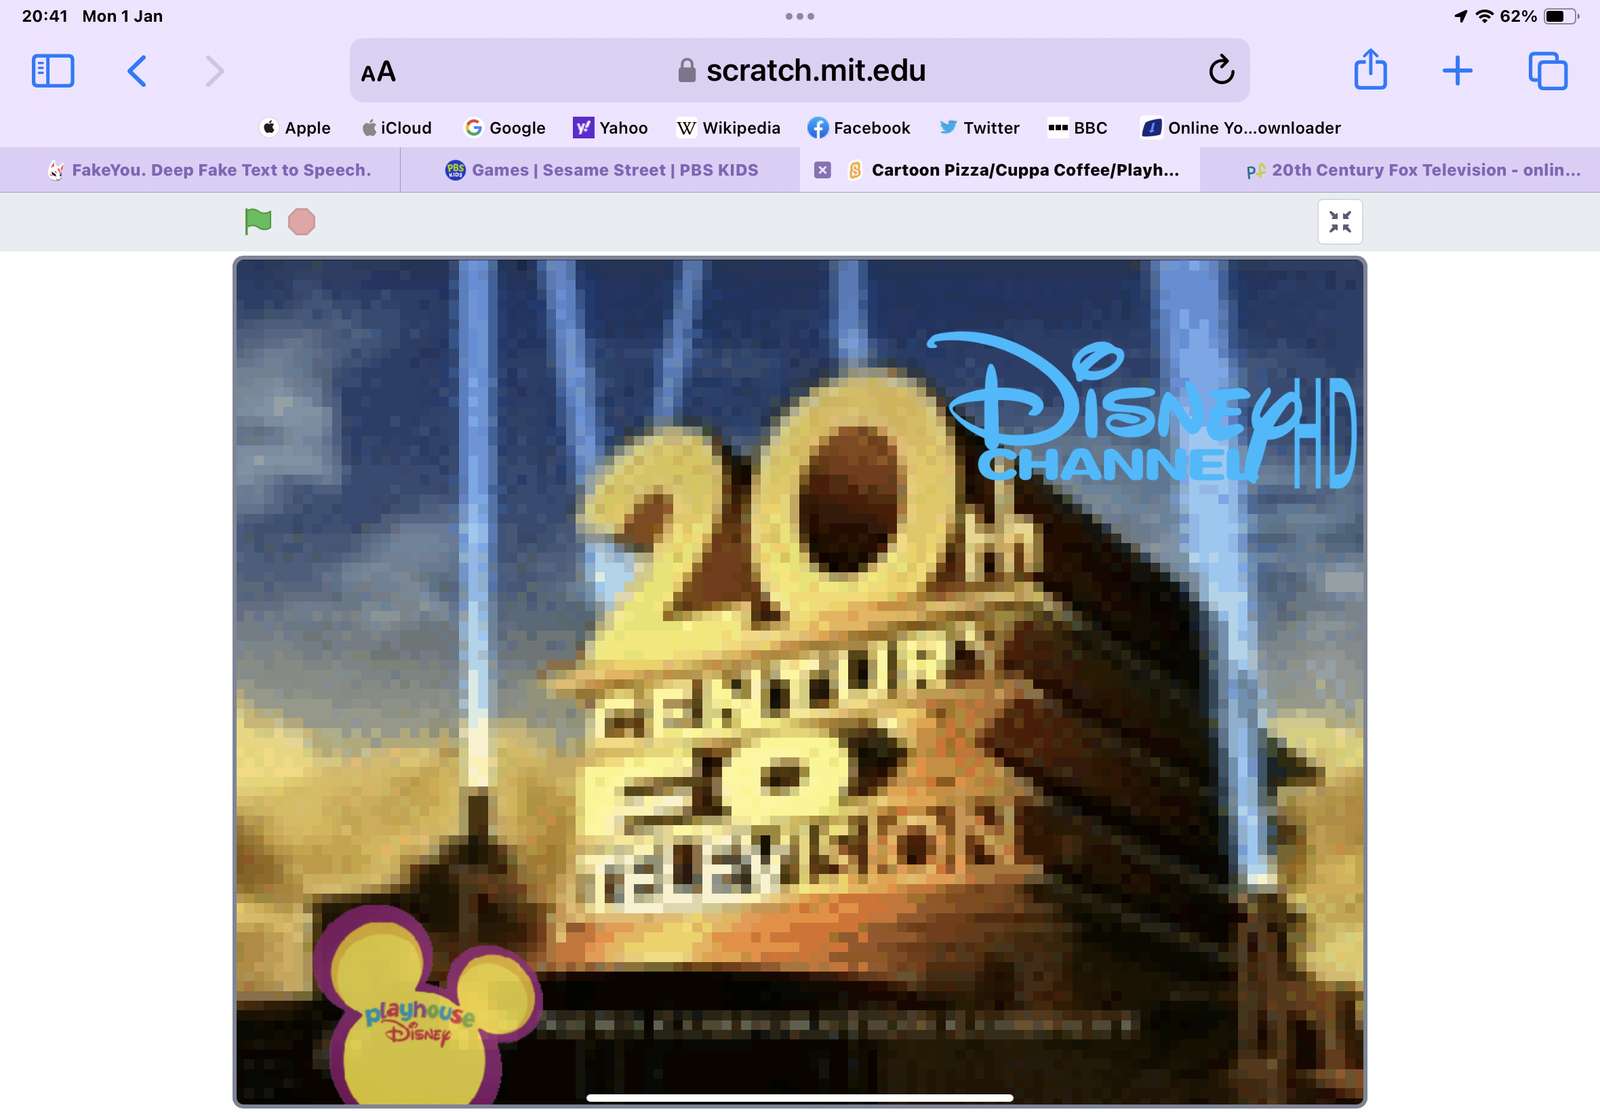 Телебачення 20th Century Fox пазл онлайн